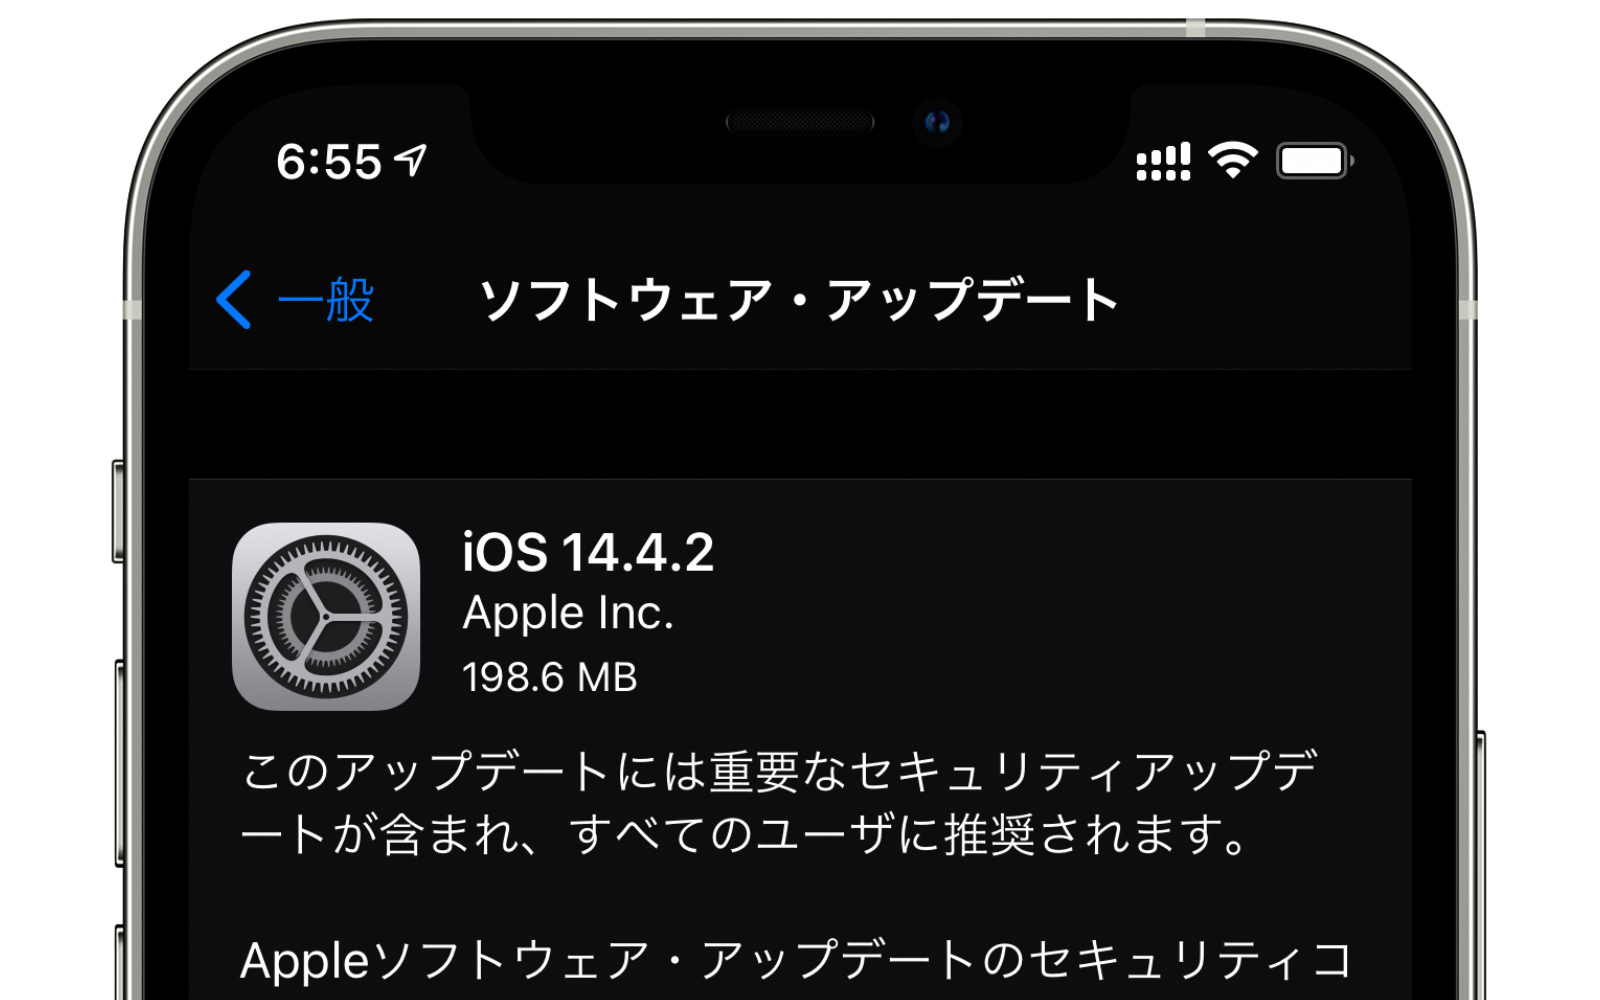 IOS14 4 2 software update